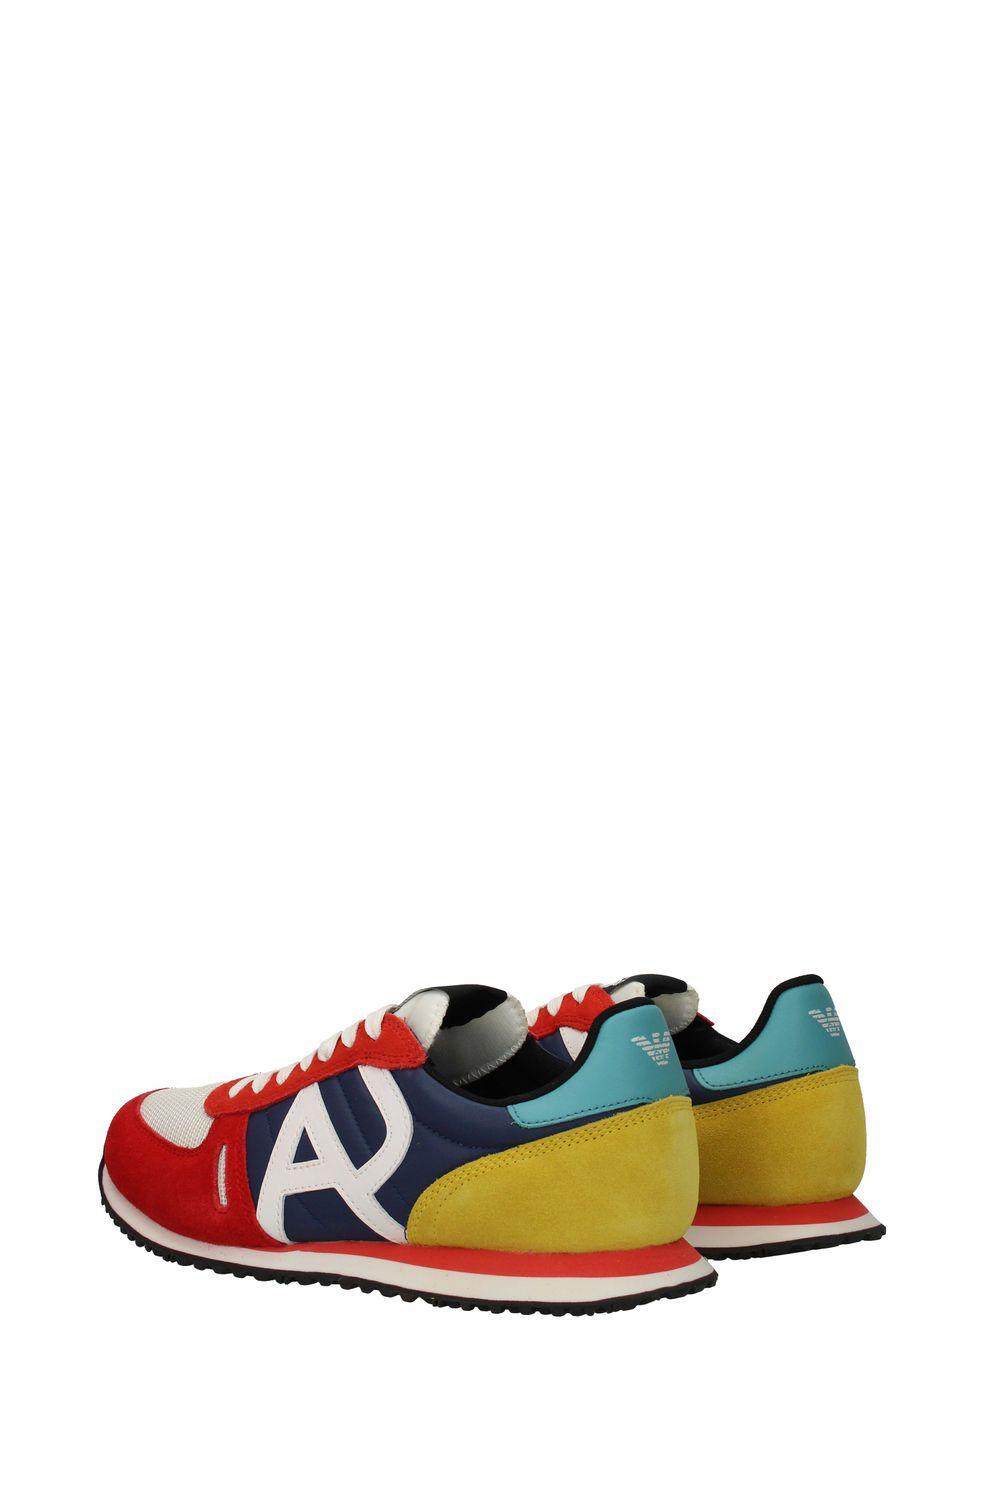 Armani Jeans Sneakers Men Multicolor for Men - Lyst